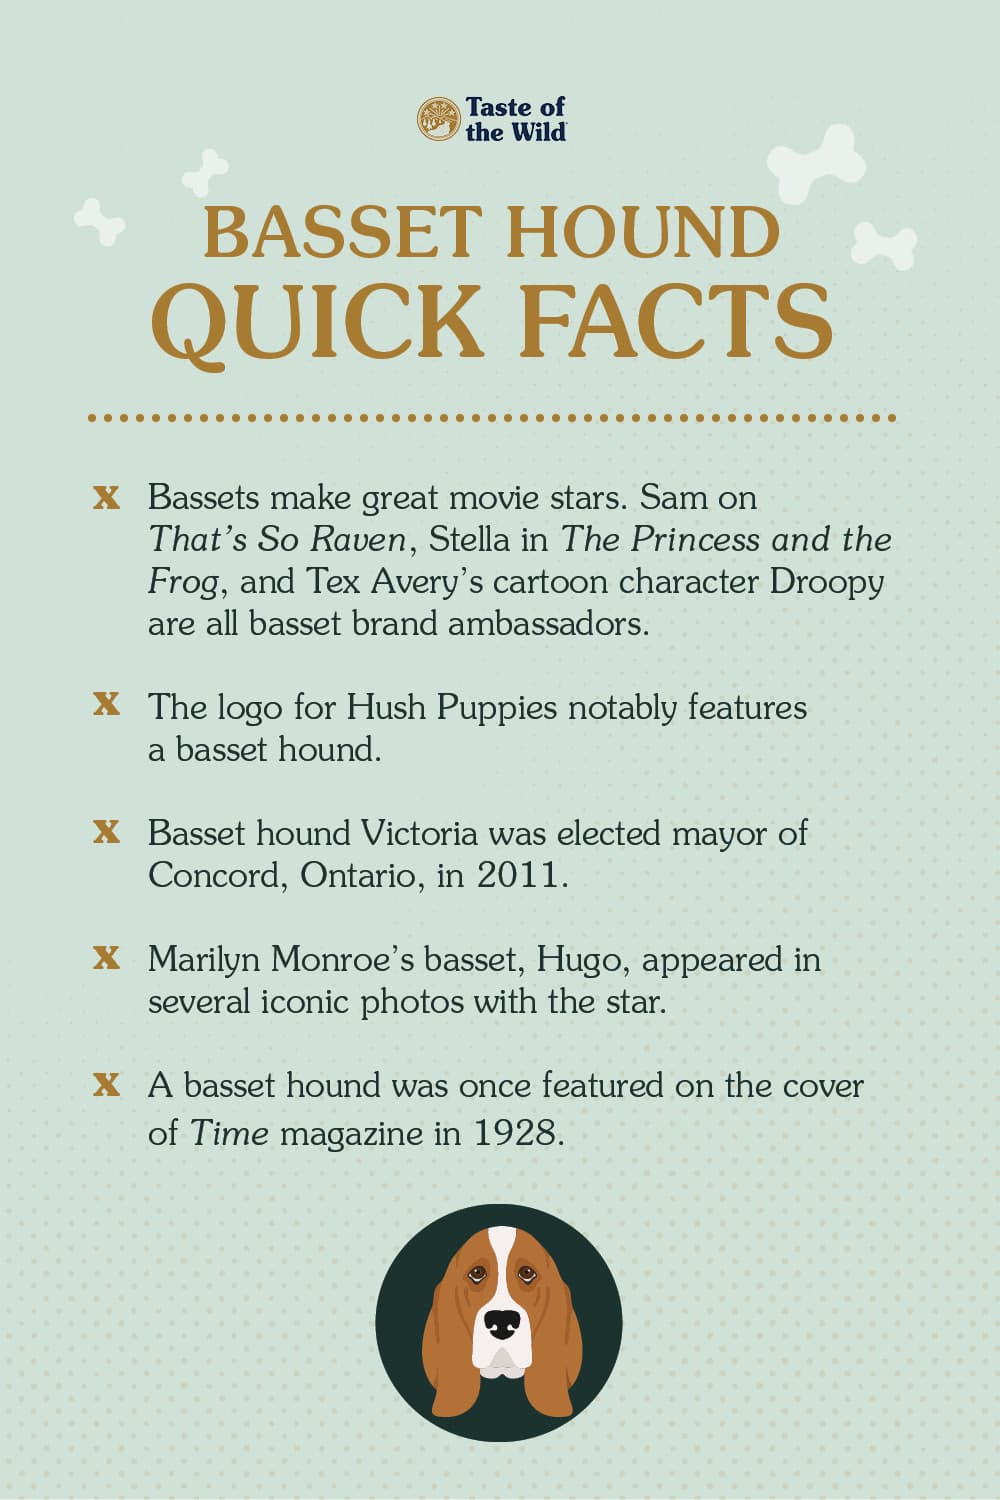 Basset Hound Quick Facts Infographic | Taste of the Wild